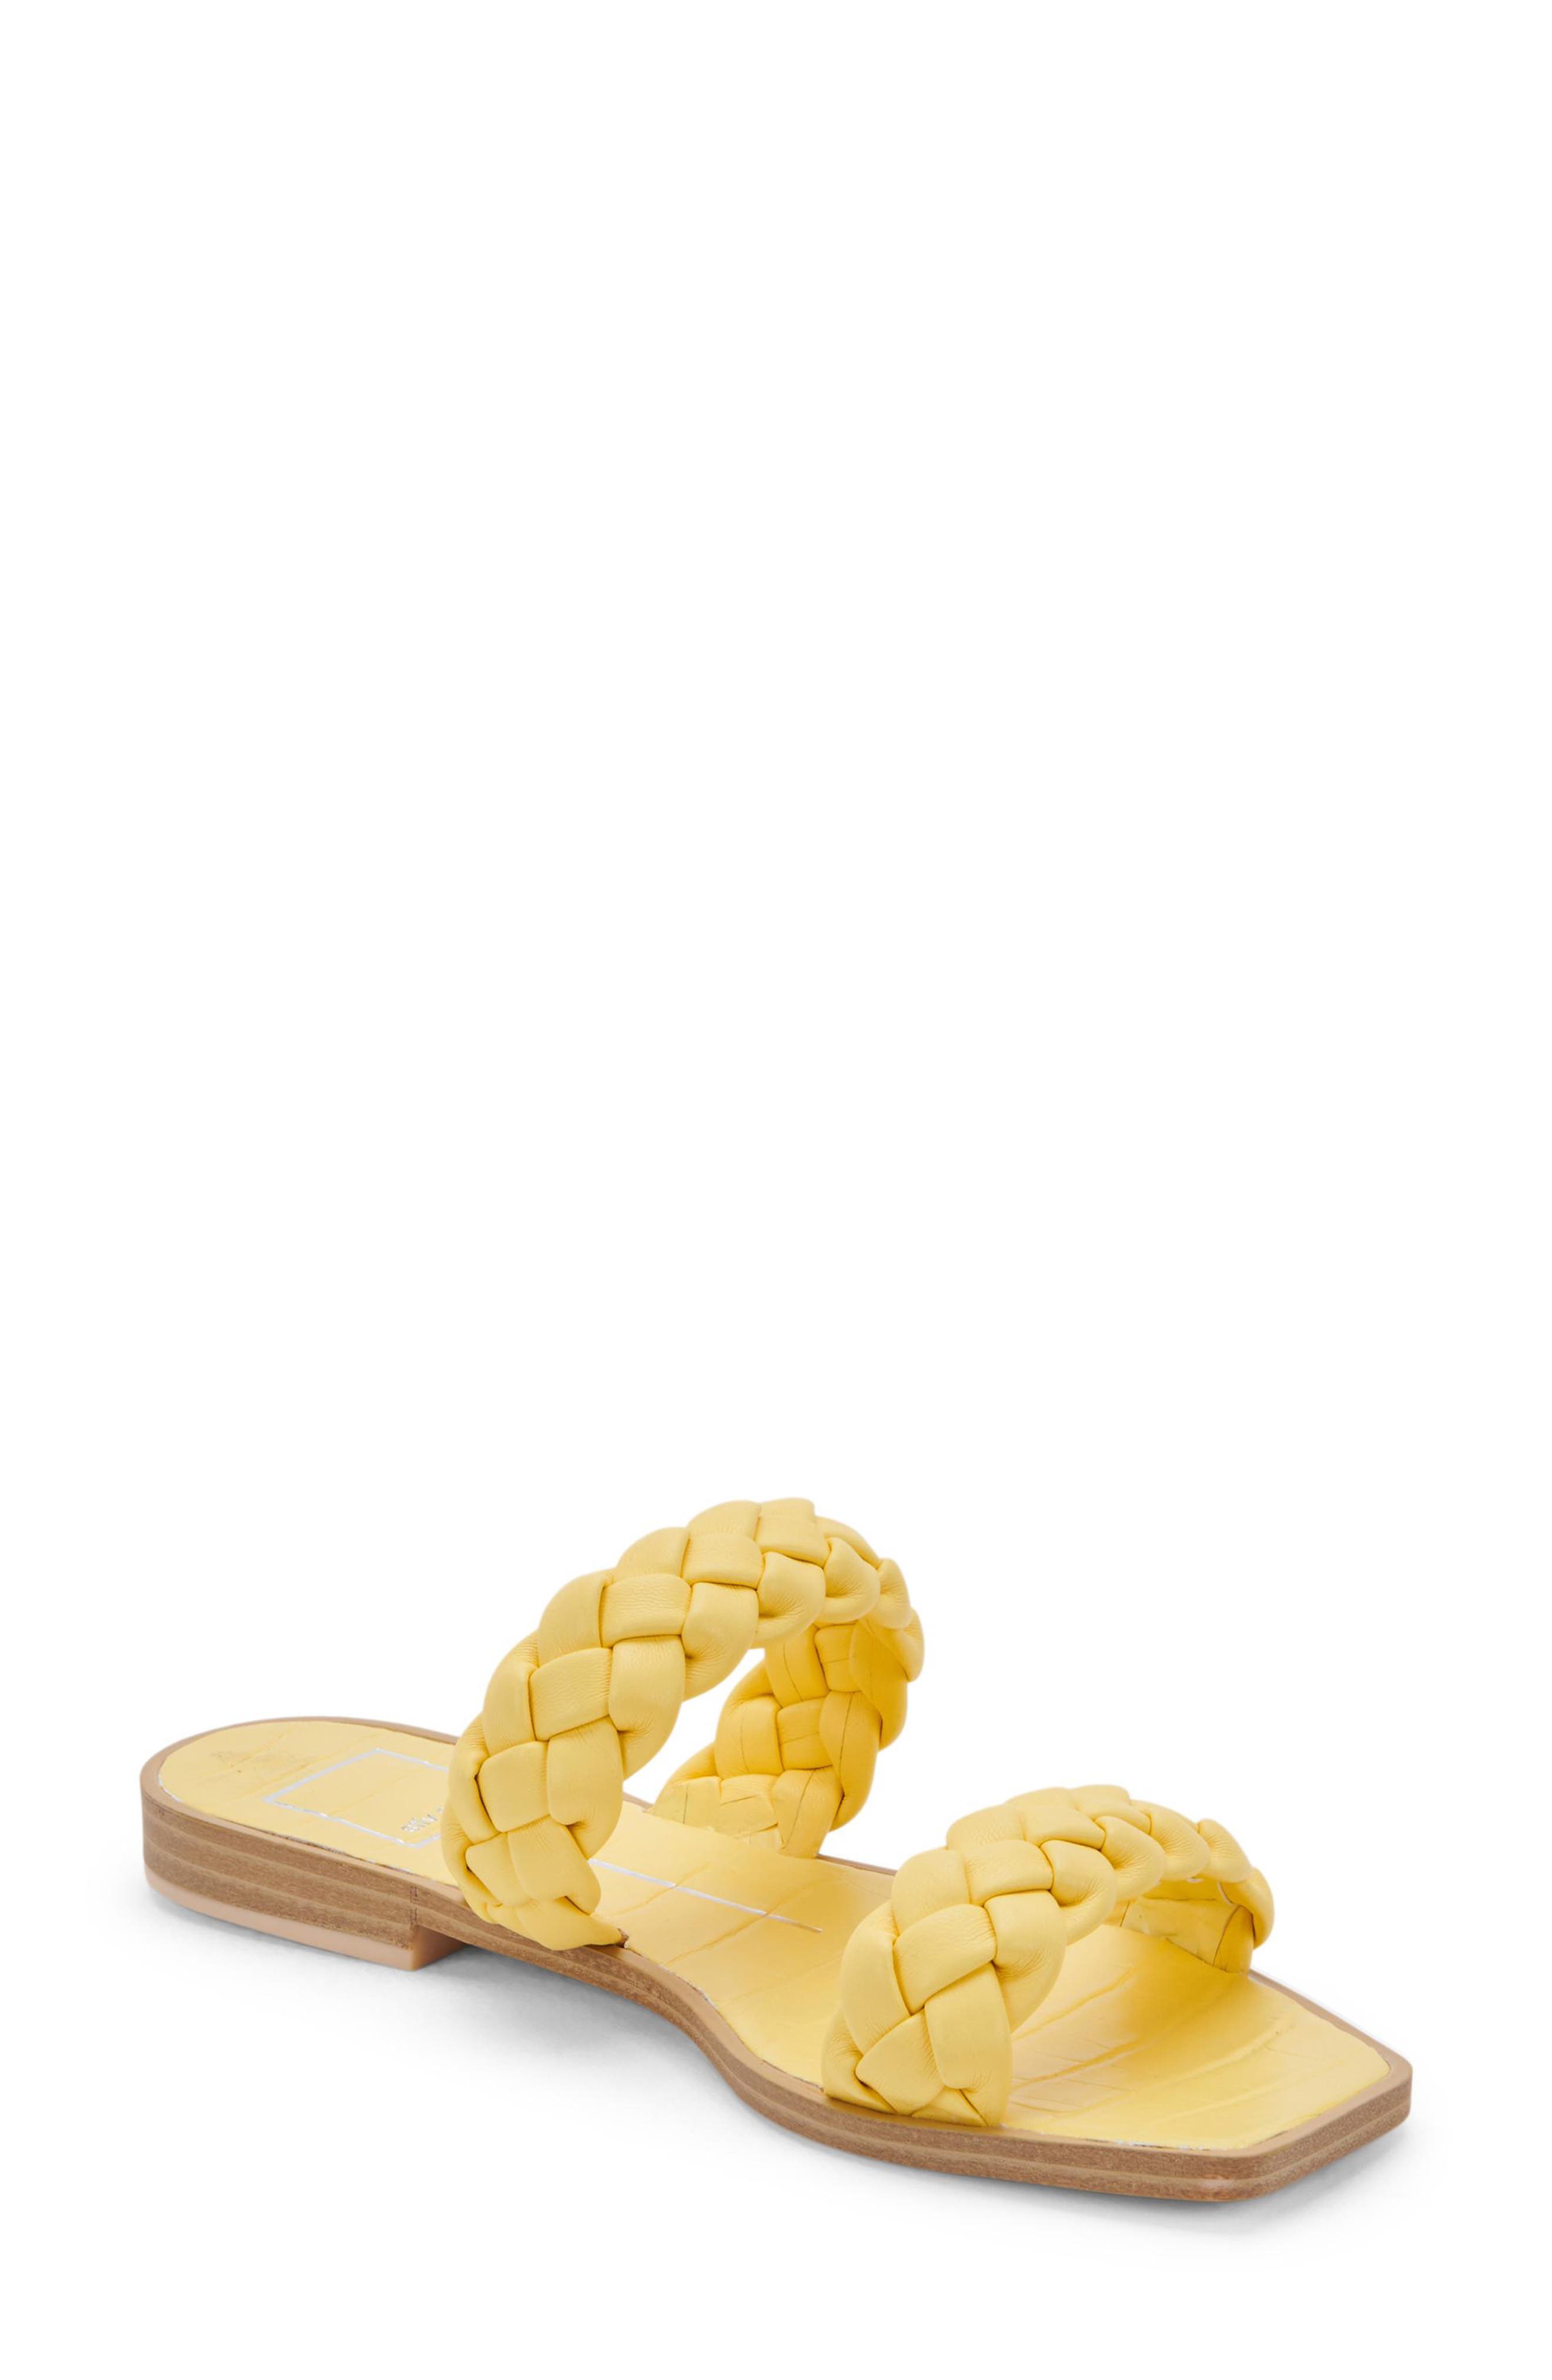 yellow flat sandals for women